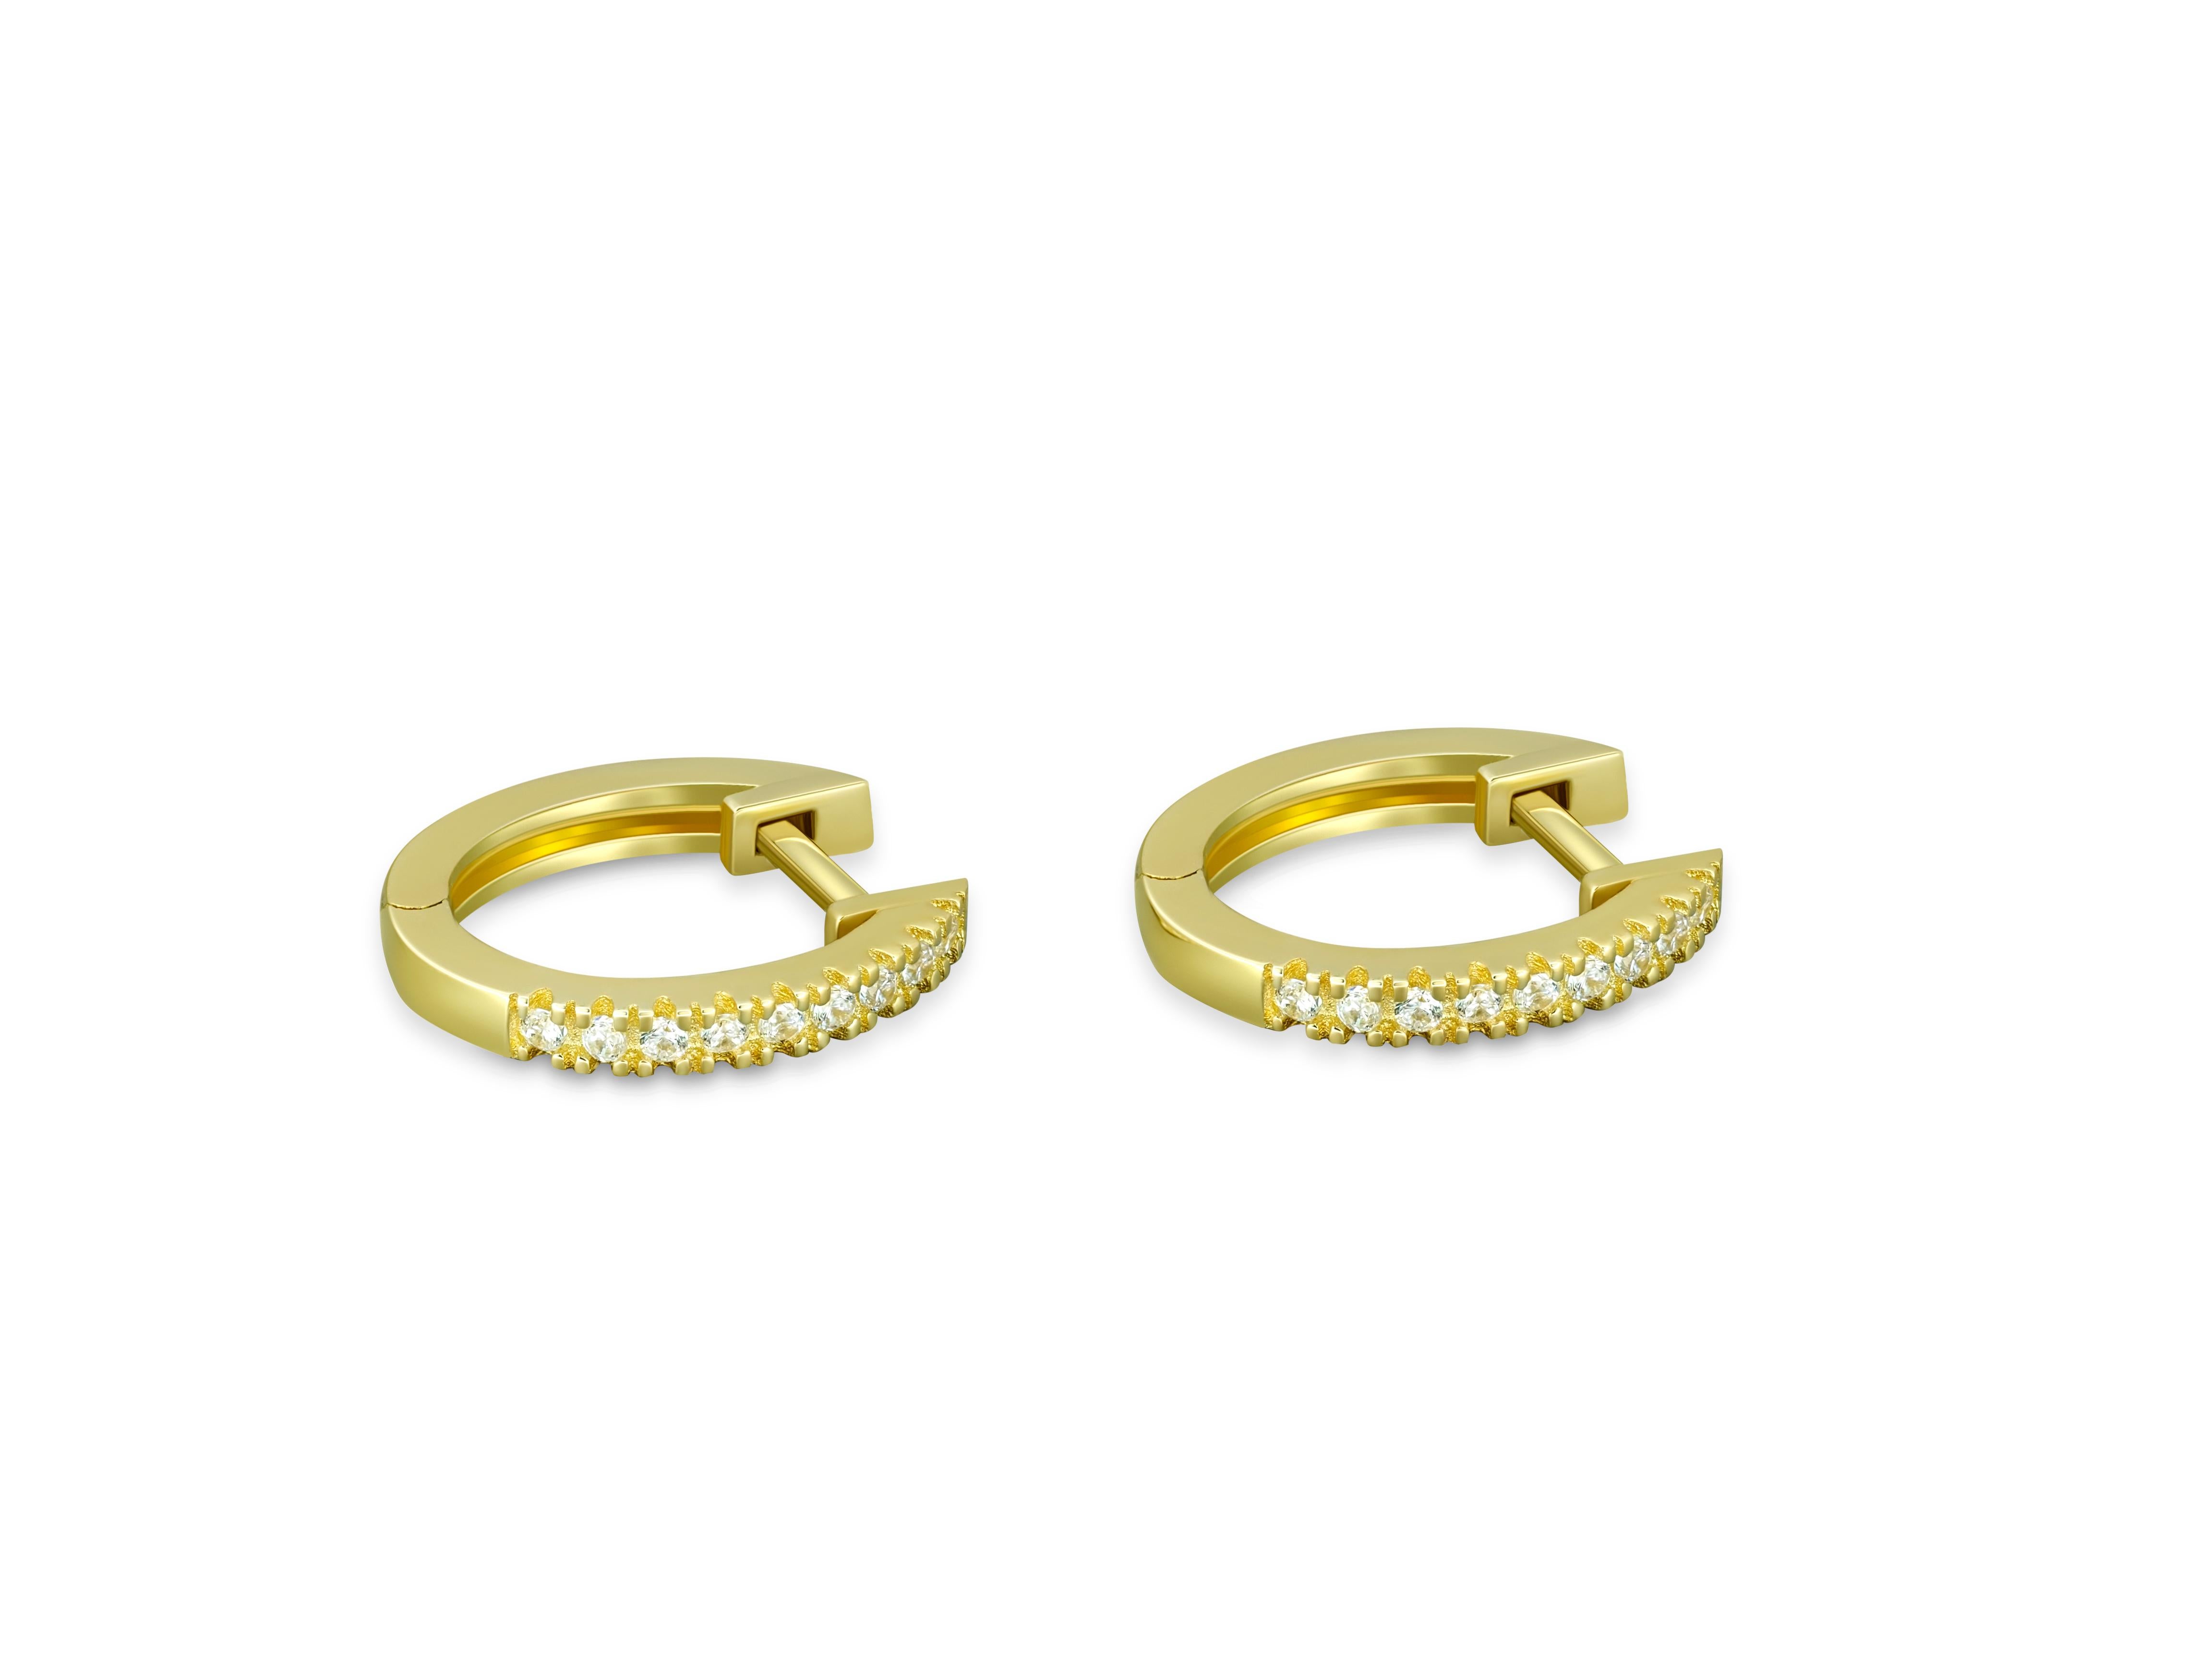 Briolette Cut Diamond Hoop Earrings and Amethyst Briolette Charms in 14k Gold.  For Sale